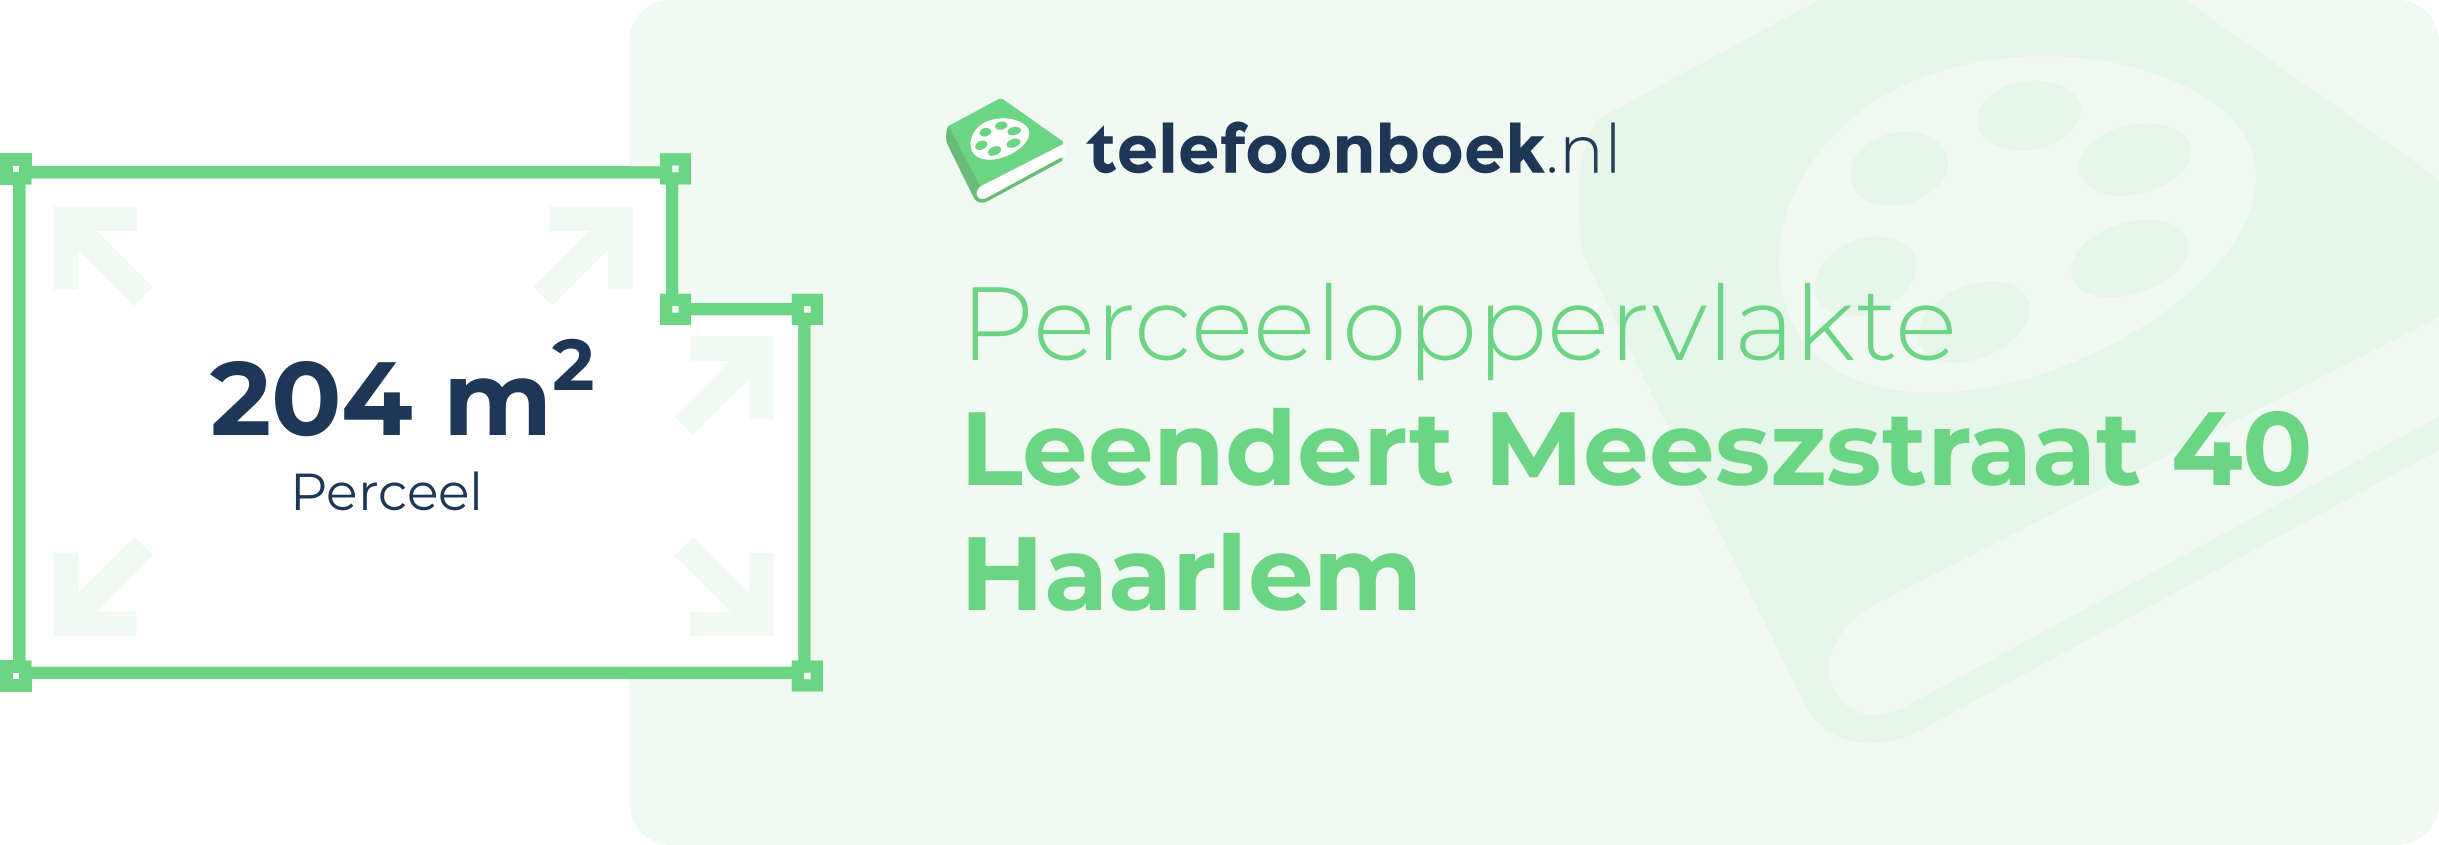 Perceeloppervlakte Leendert Meeszstraat 40 Haarlem